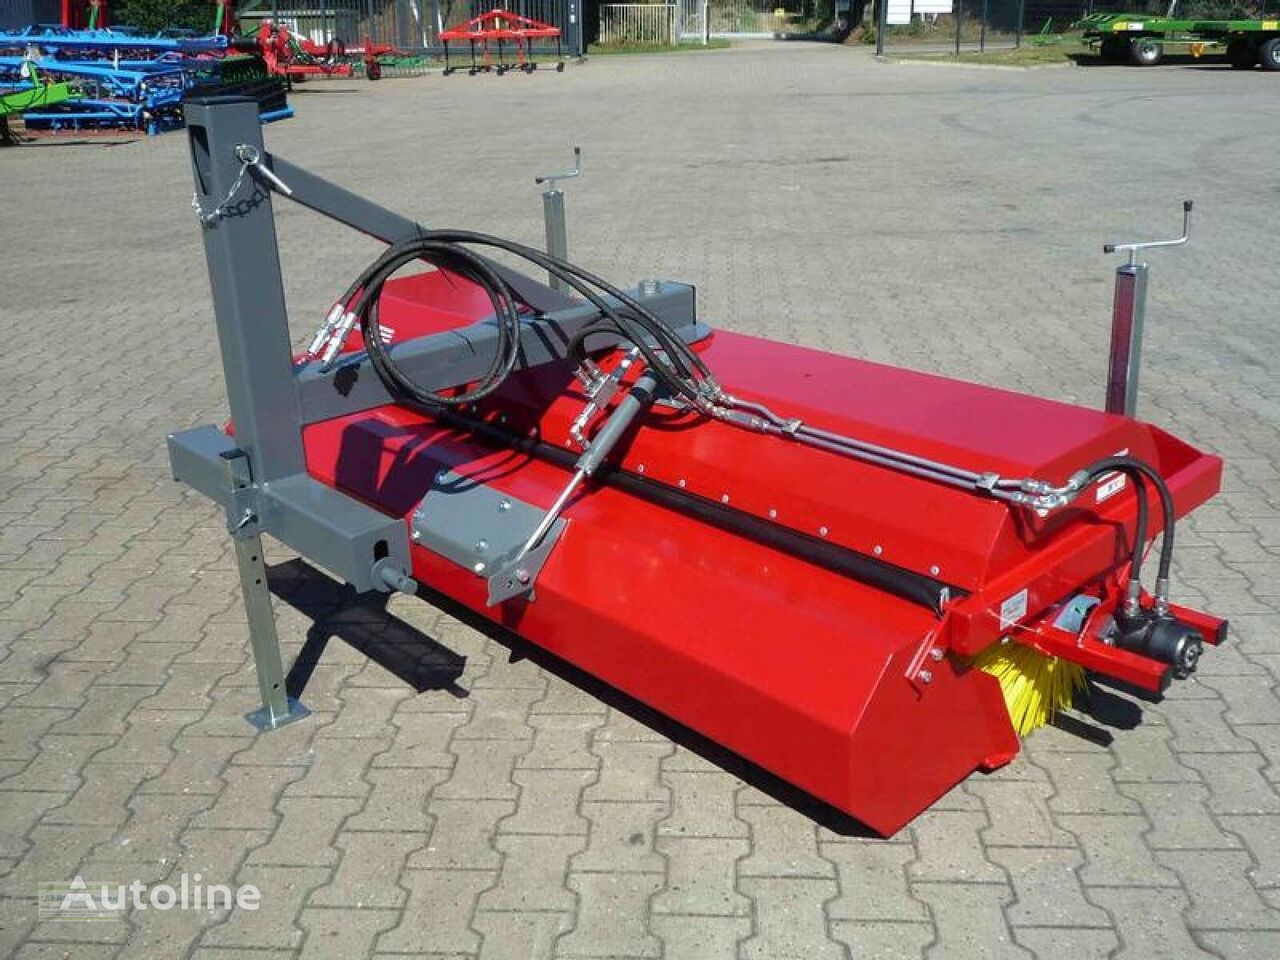 nova Euro-Jabelmann Schlepperkehrmaschinen 2,25 m, einschl. hydr. Entleerung, aus la četka za čišćenje ulica